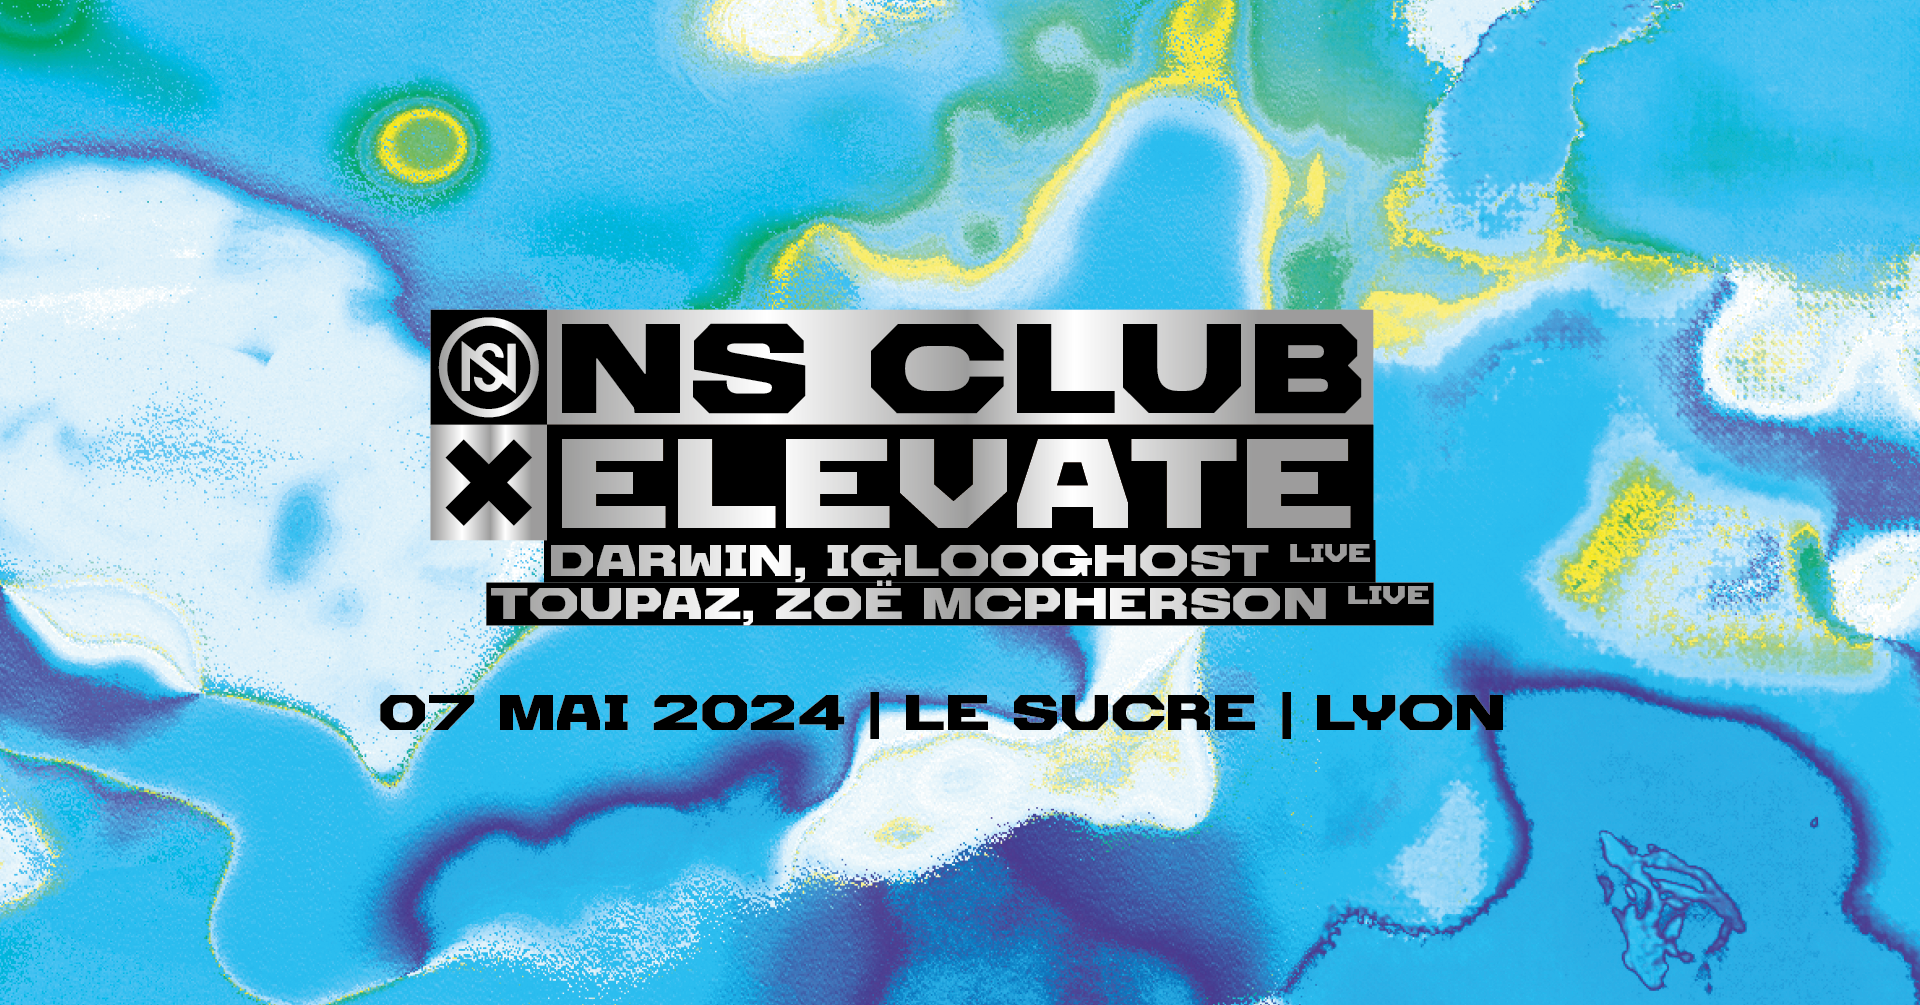 Ns club x Elevate: Darwin / Iglooghost (live) / Toupaz / Zoë Mc Pherson (live) - フライヤー表